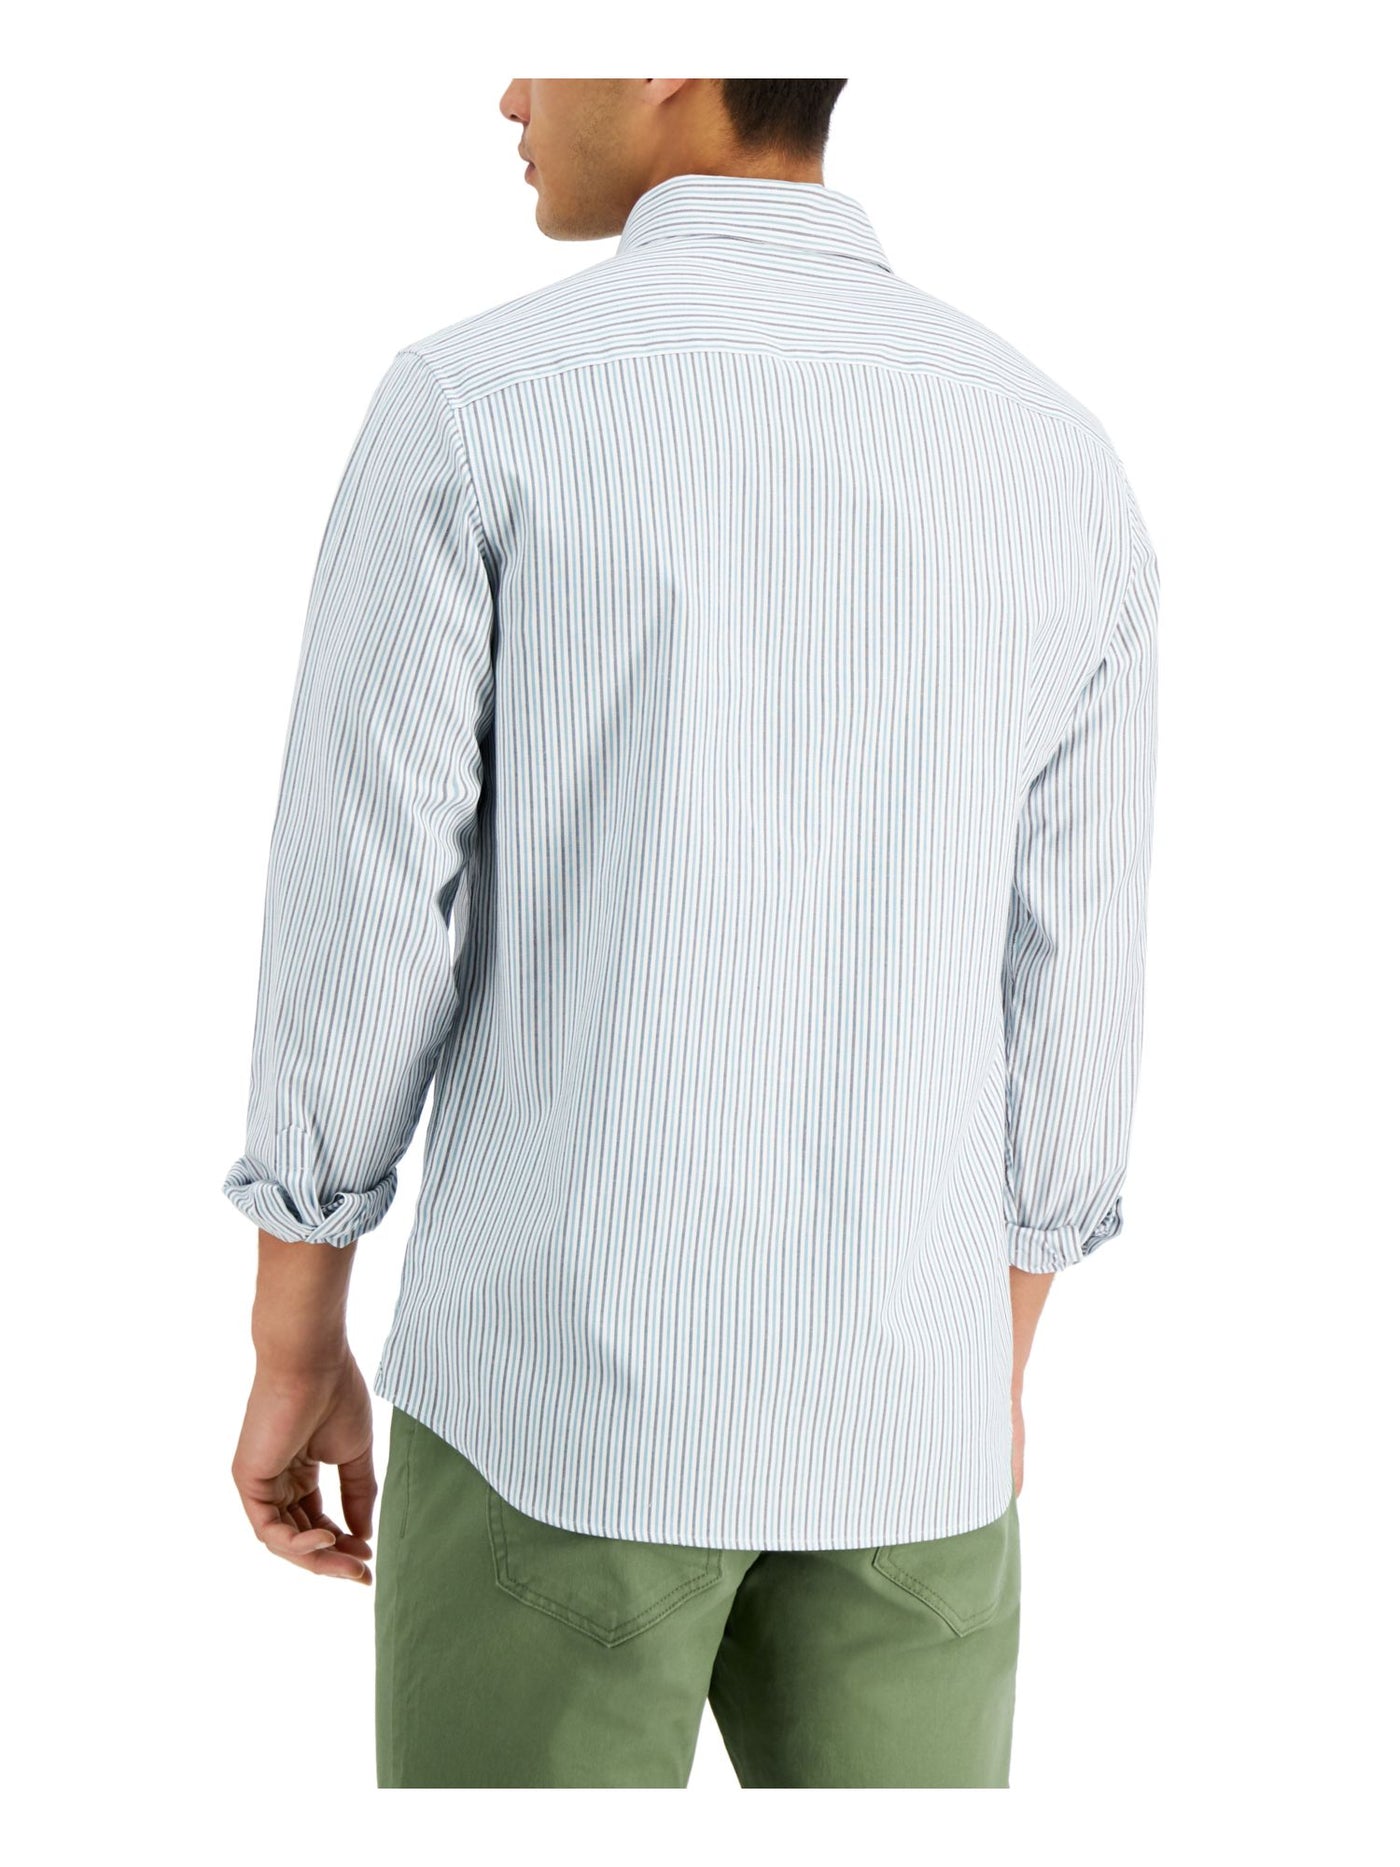 MICHAEL KORS Mens Green Pinstripe Collared Slim Fit Button Down Cotton Cotton Shirt S